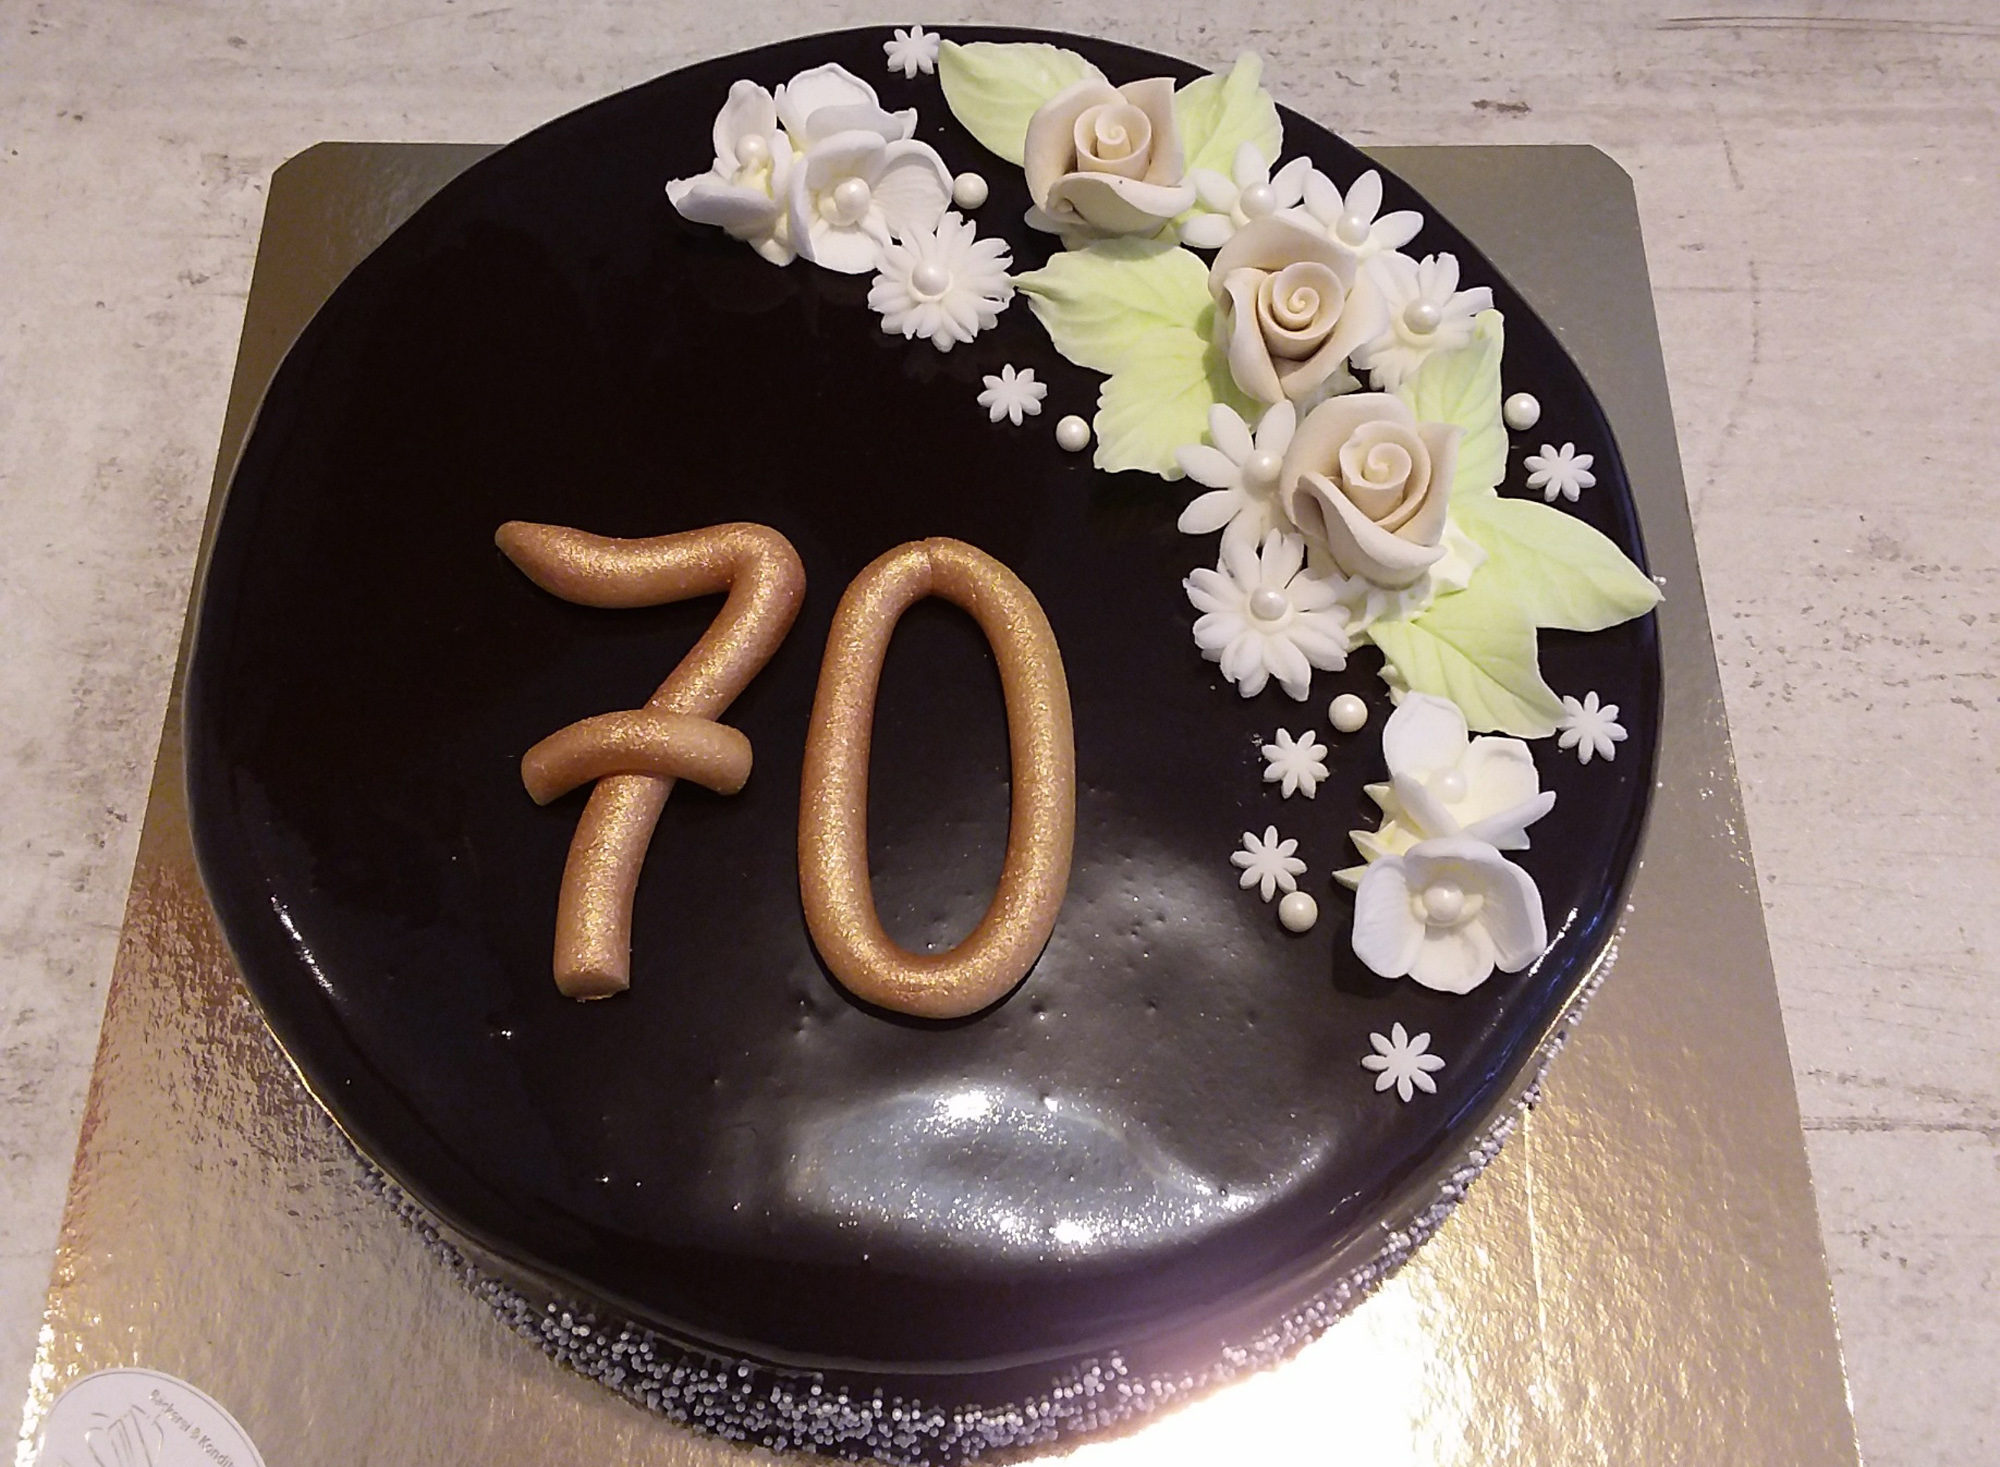 Schokoladige Geburtstagstorte zum 70.